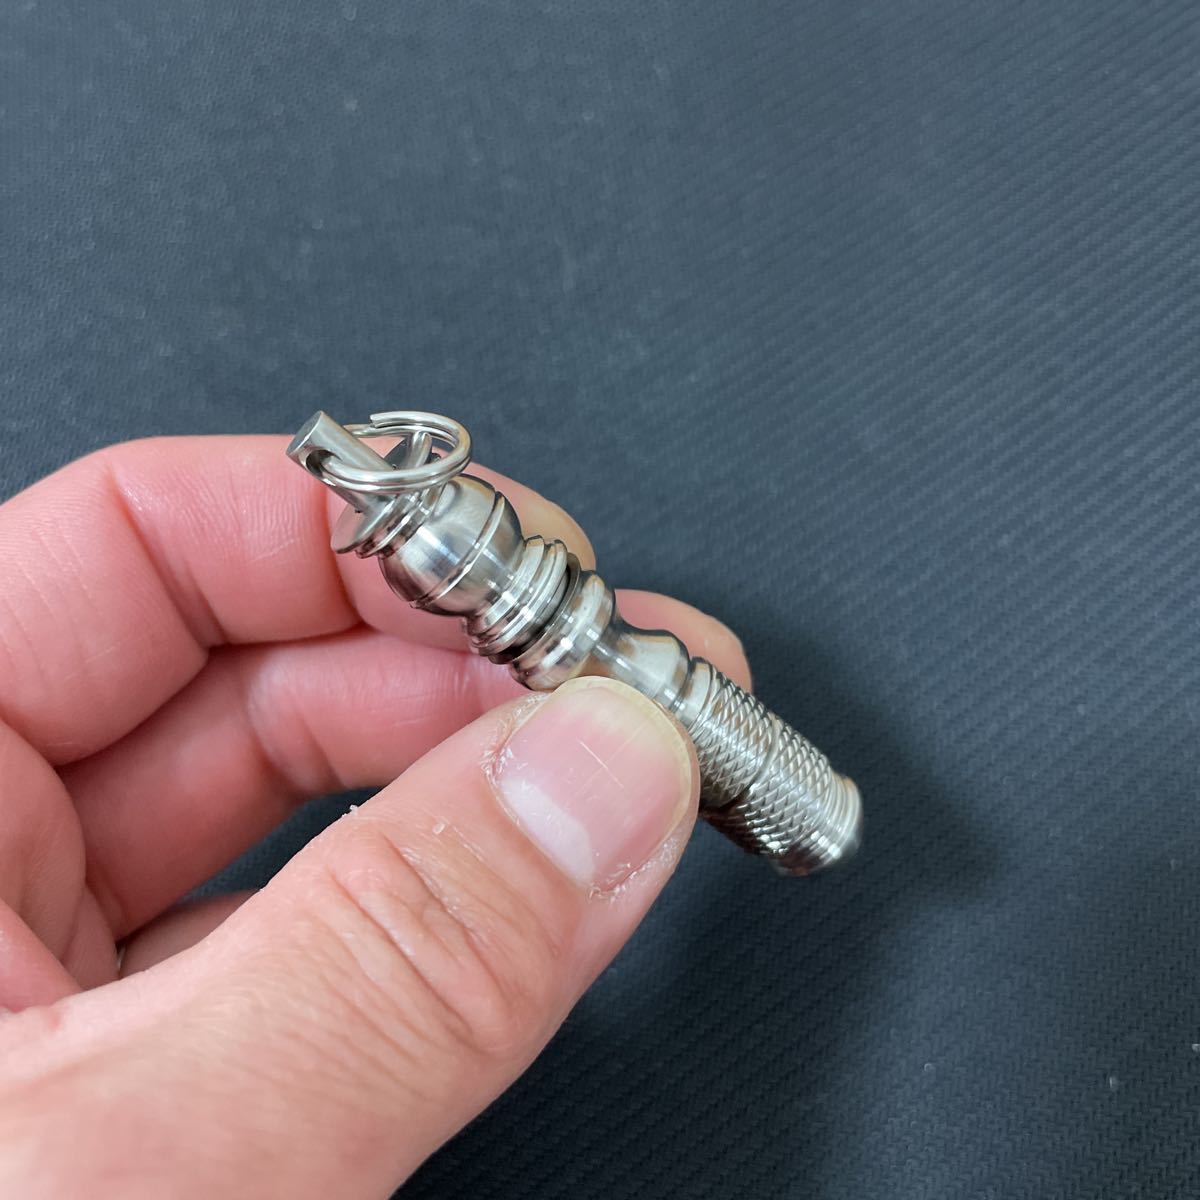 Titanium tiny keychain light inspection )EDC flash light